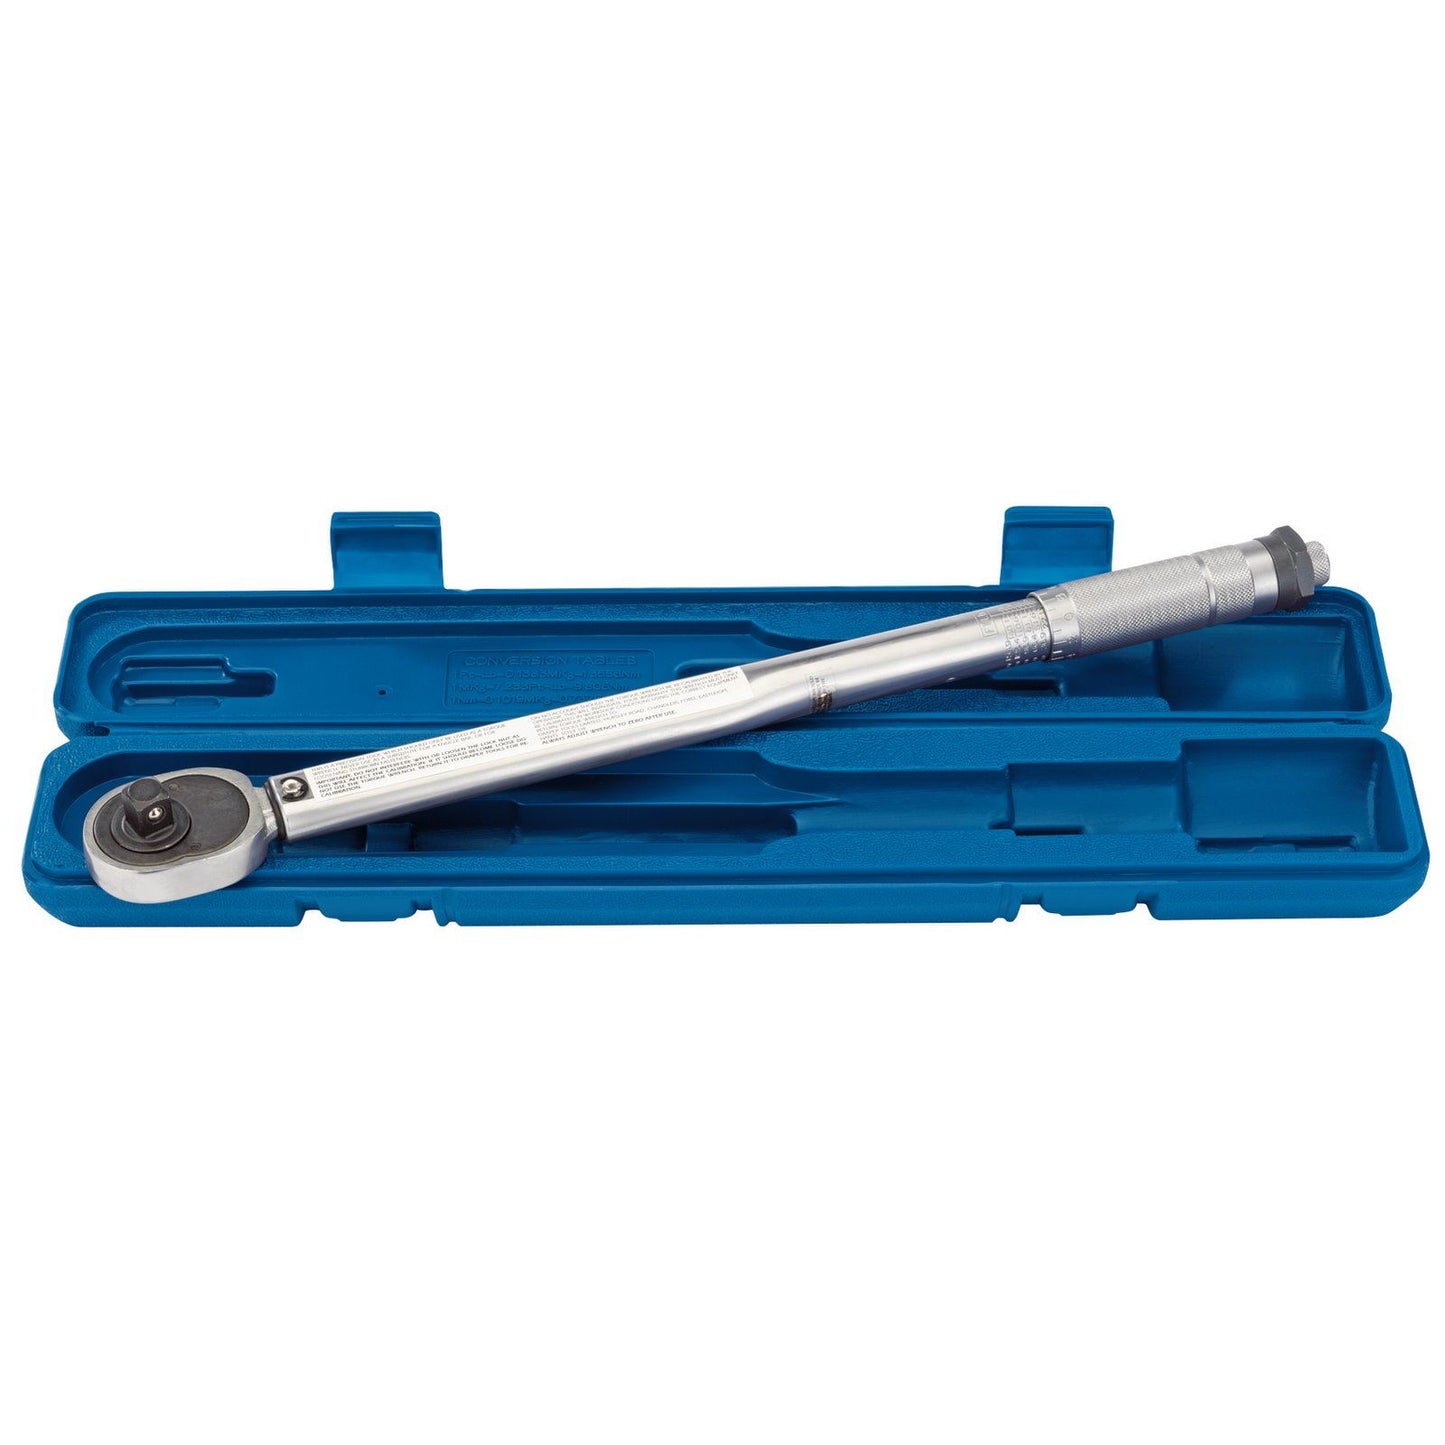 Draper 1/2" Sq.Drive Micrometer Reversible Ratchet Torque Wrench 30-210Nm 30357